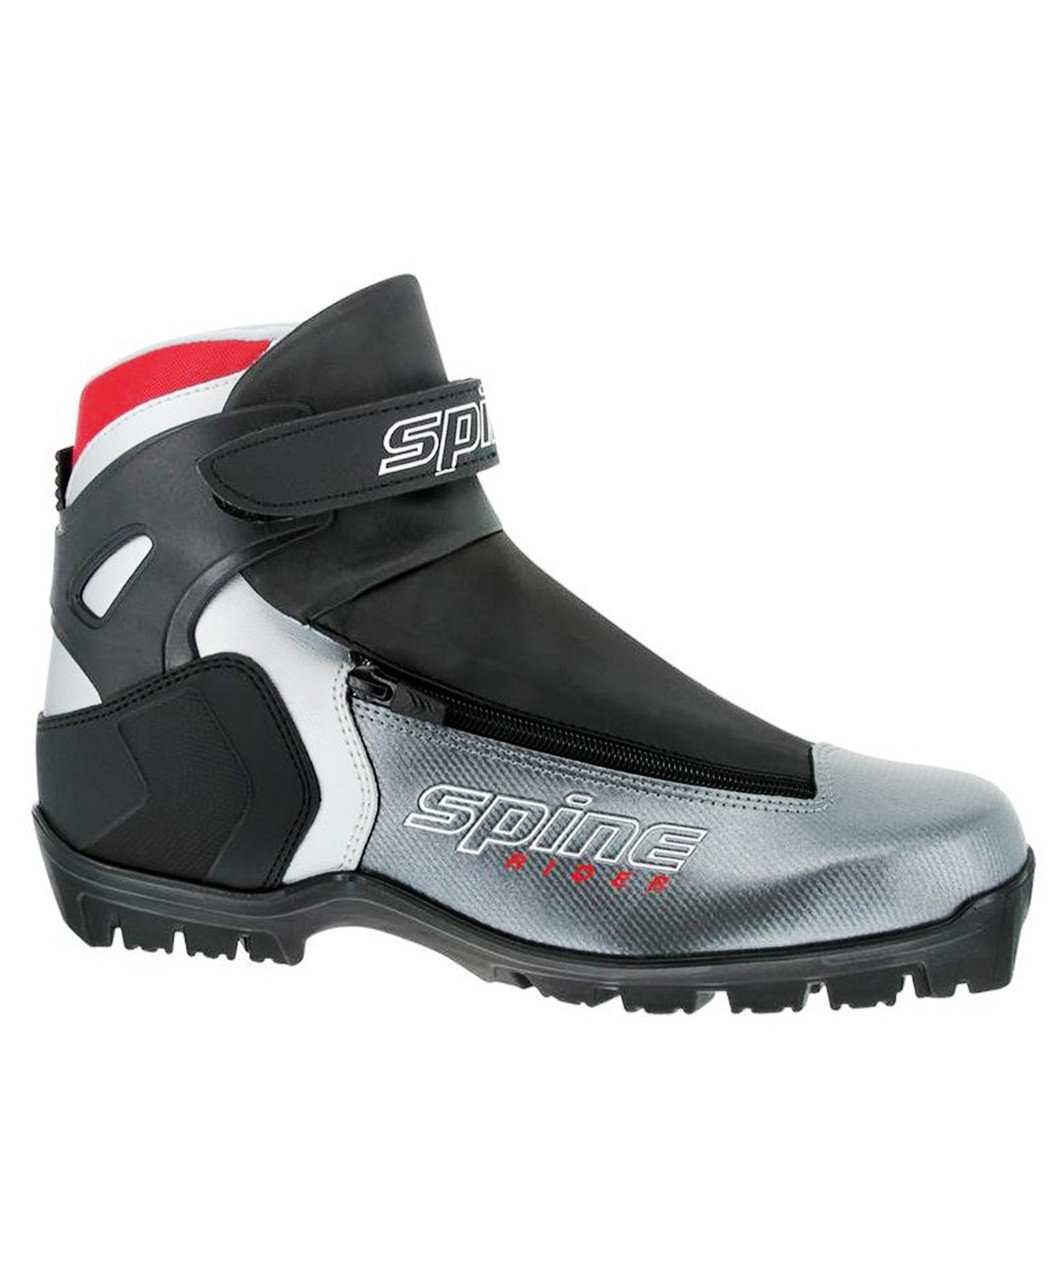 Ботинки спайн купить. Лыжные ботинки Spine Rider 454. Лыжные ботинки Spine x-Rider. Spine Rider 295 лыжные ботинки. Ботинки лыжные Spine x-Rider 454.